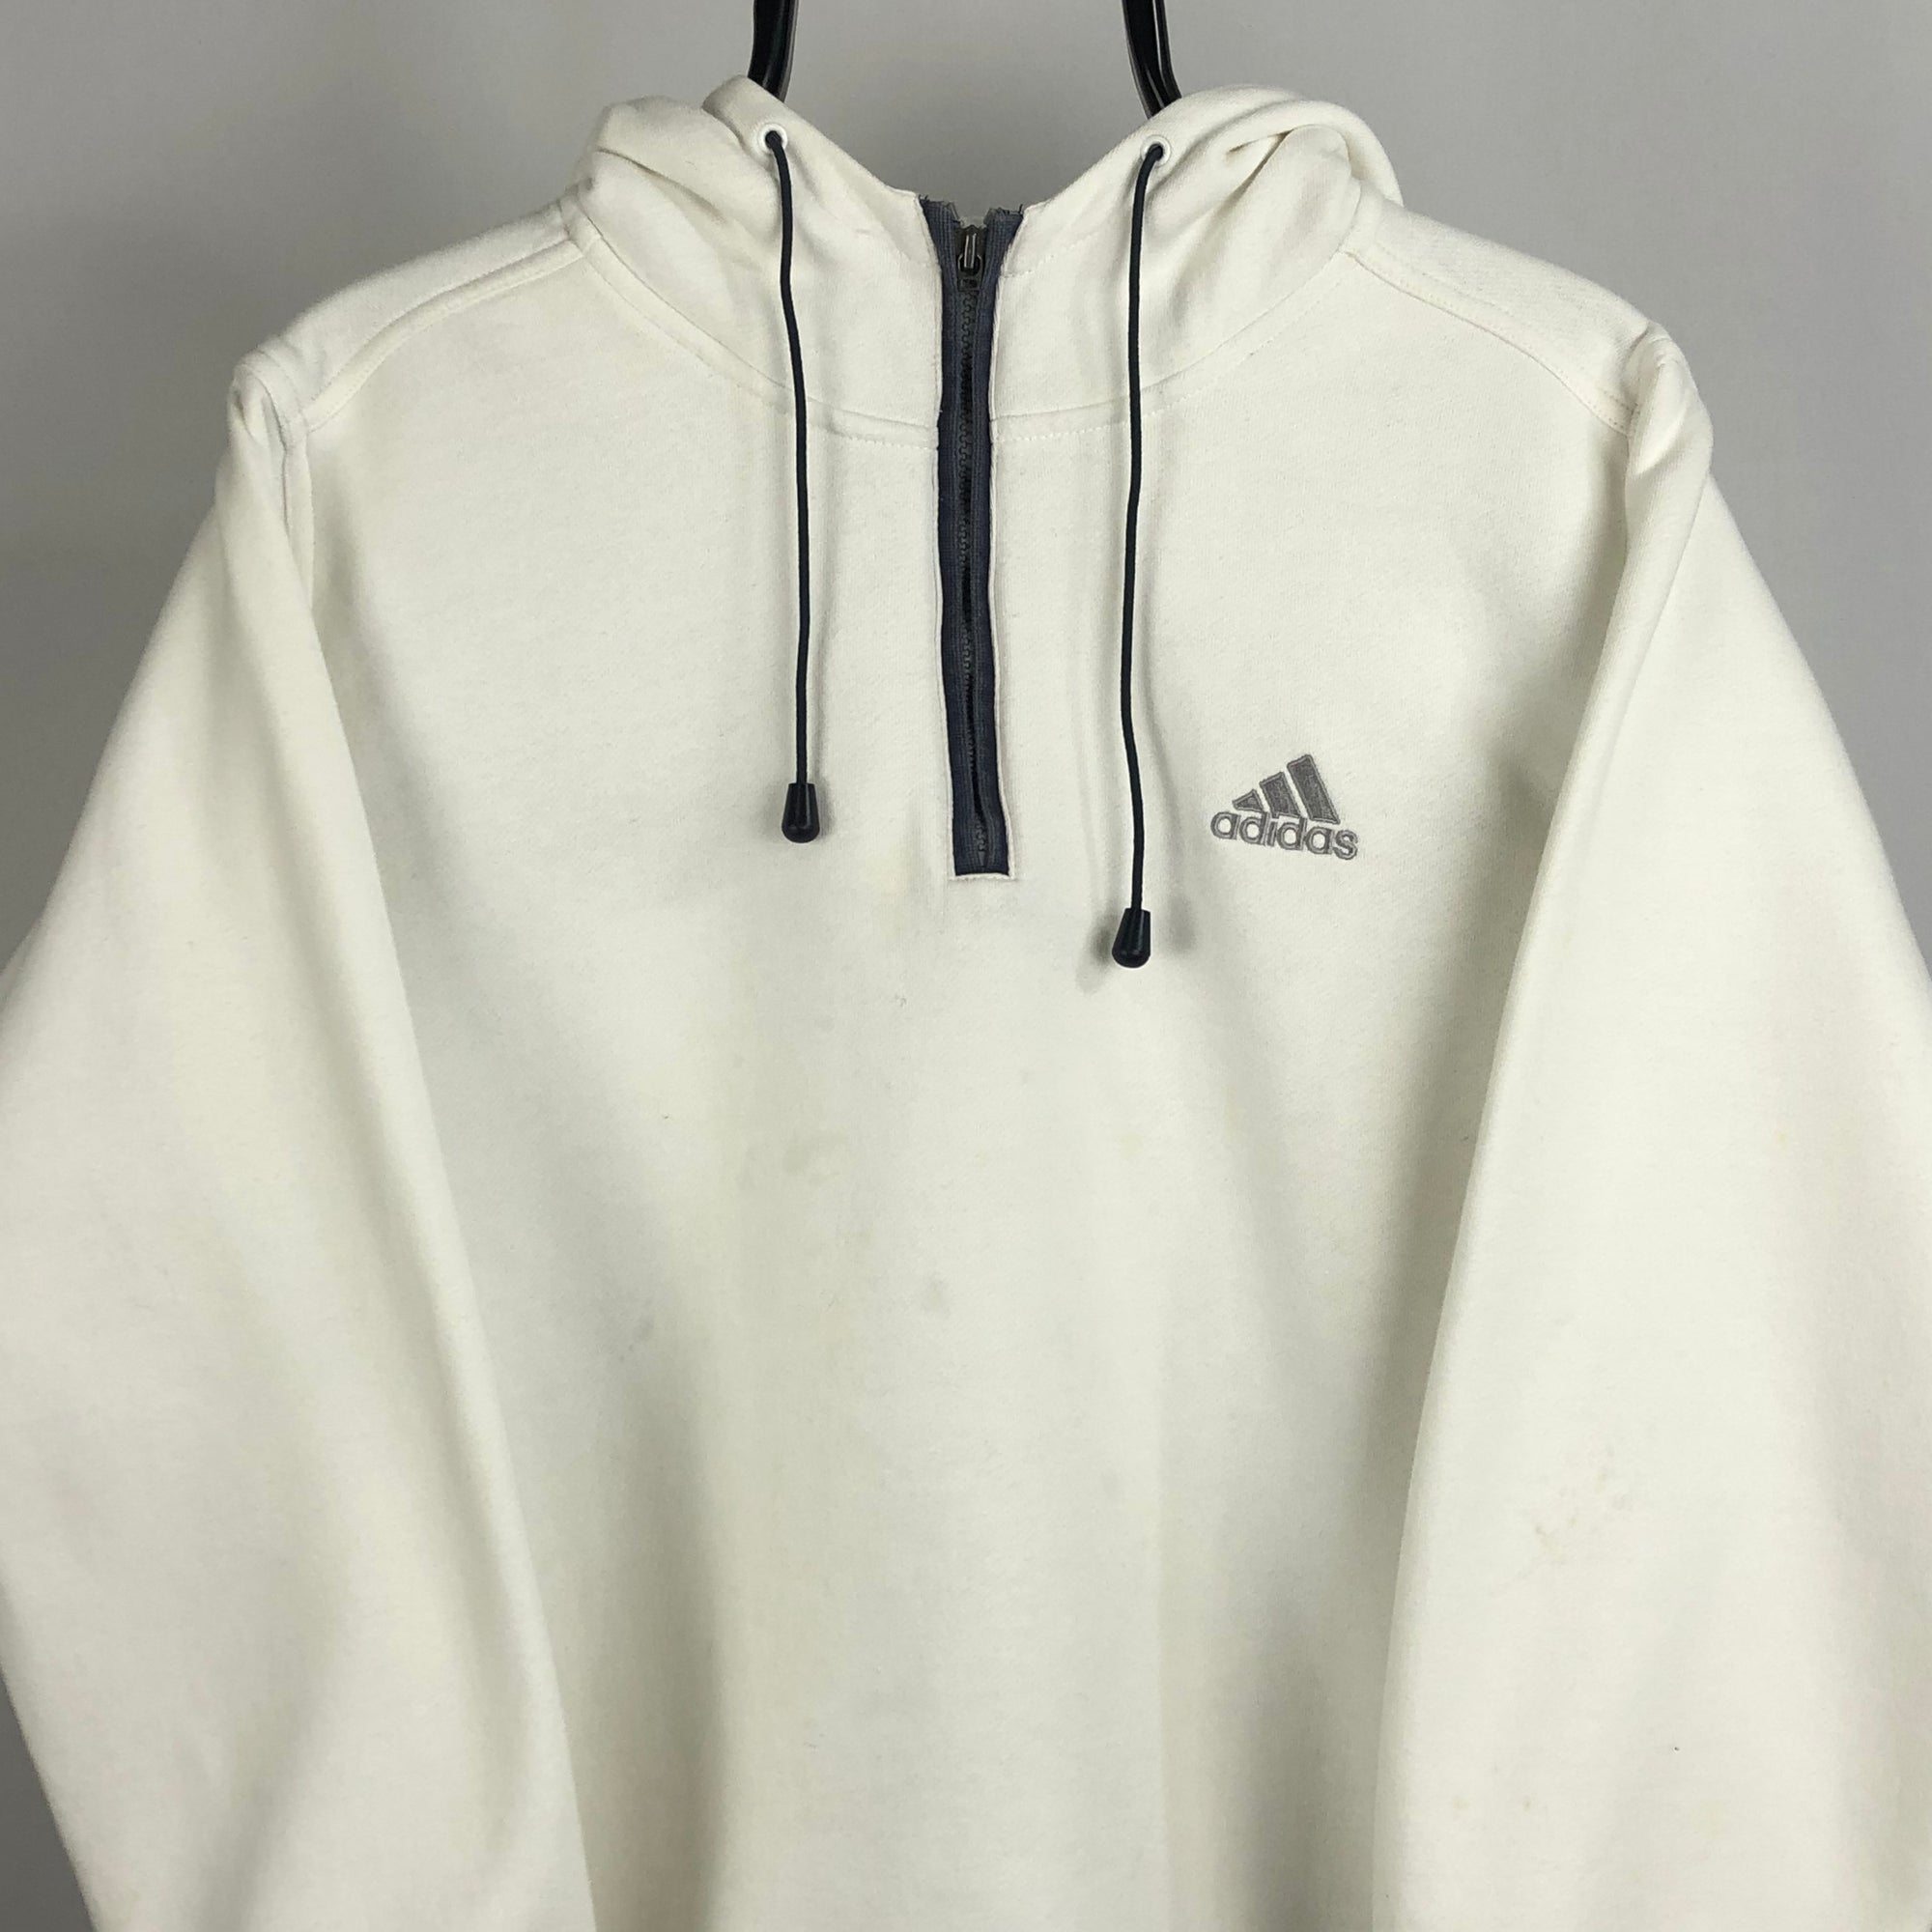 Vintage Adidas 1/4 Zip Hoodie in White - Men's Small/Women's Medium